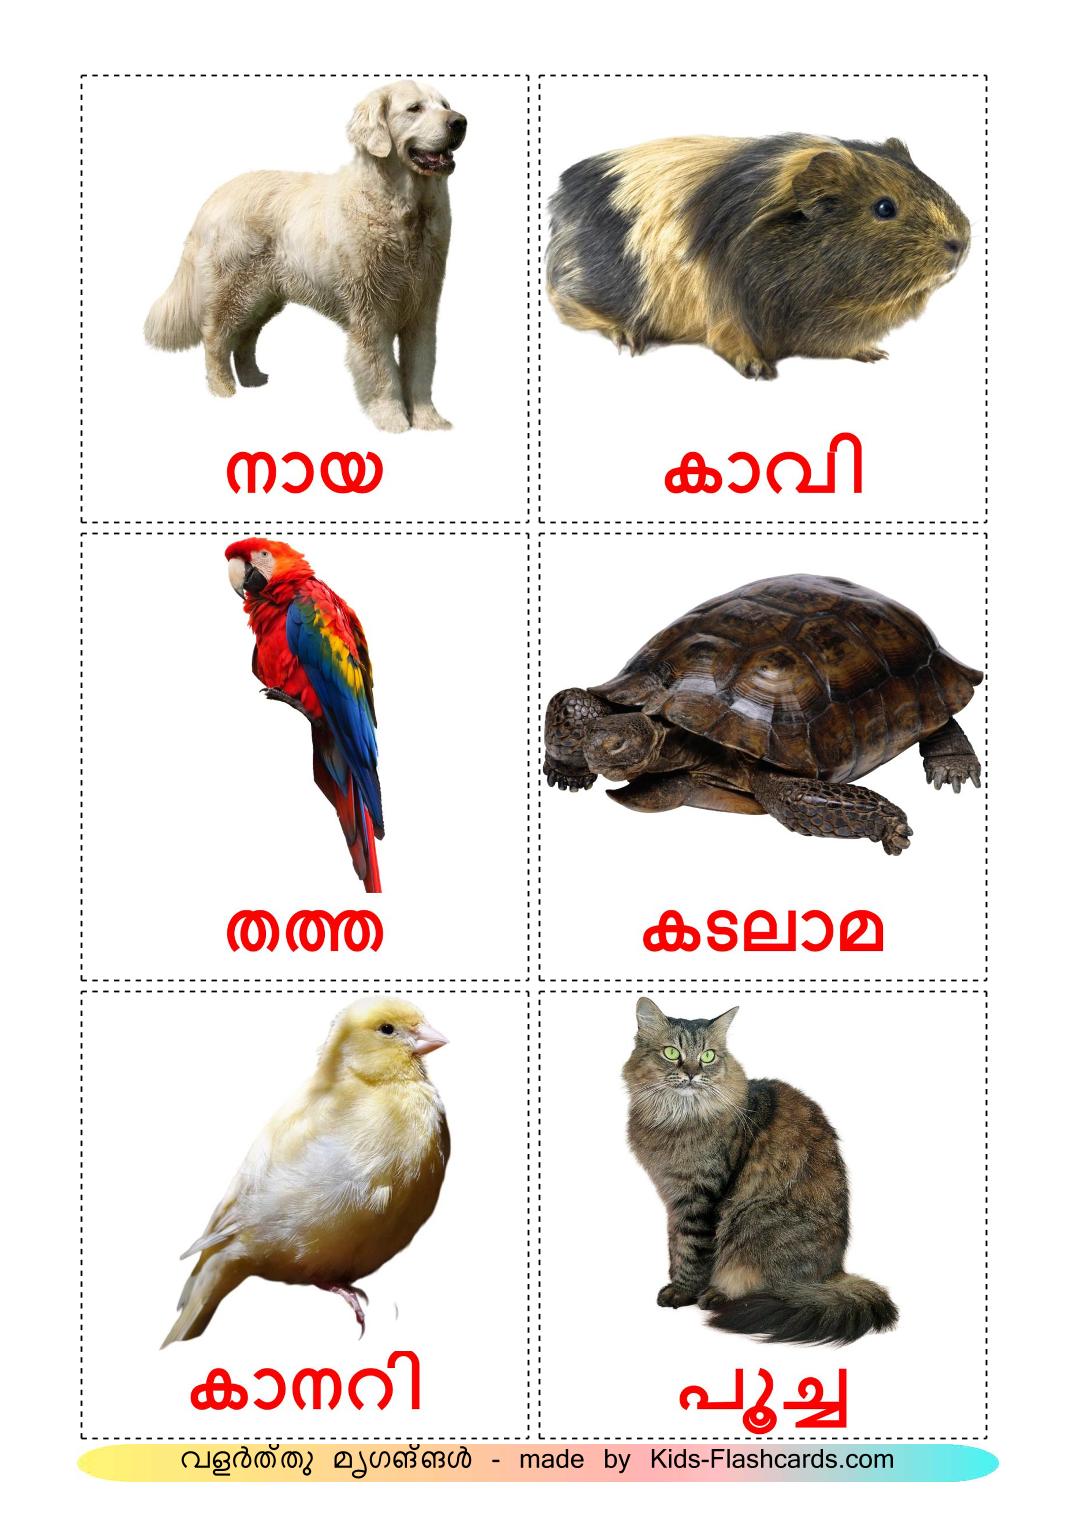 Animales Domésticos - 10 fichas de malayalam para imprimir gratis 